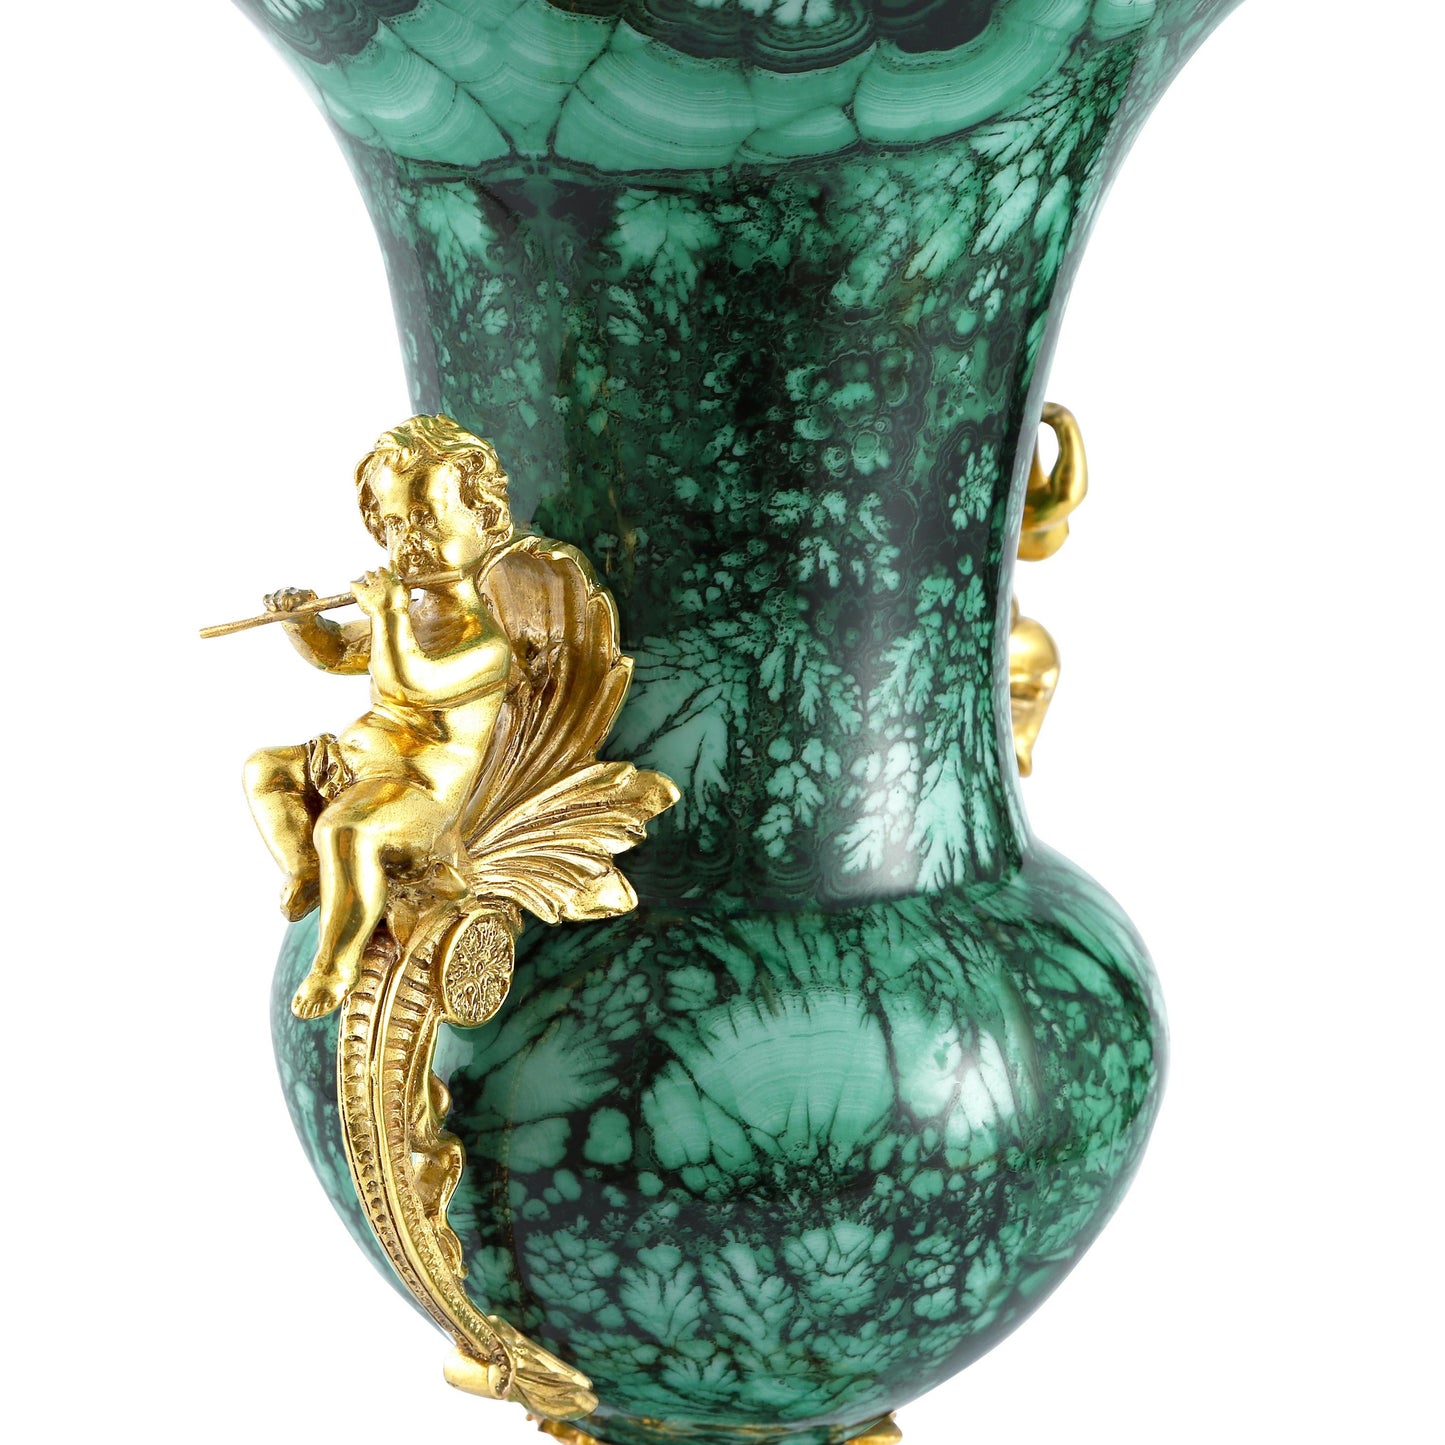 DECOELEVEN ™ Cherub Vase in Classic Green